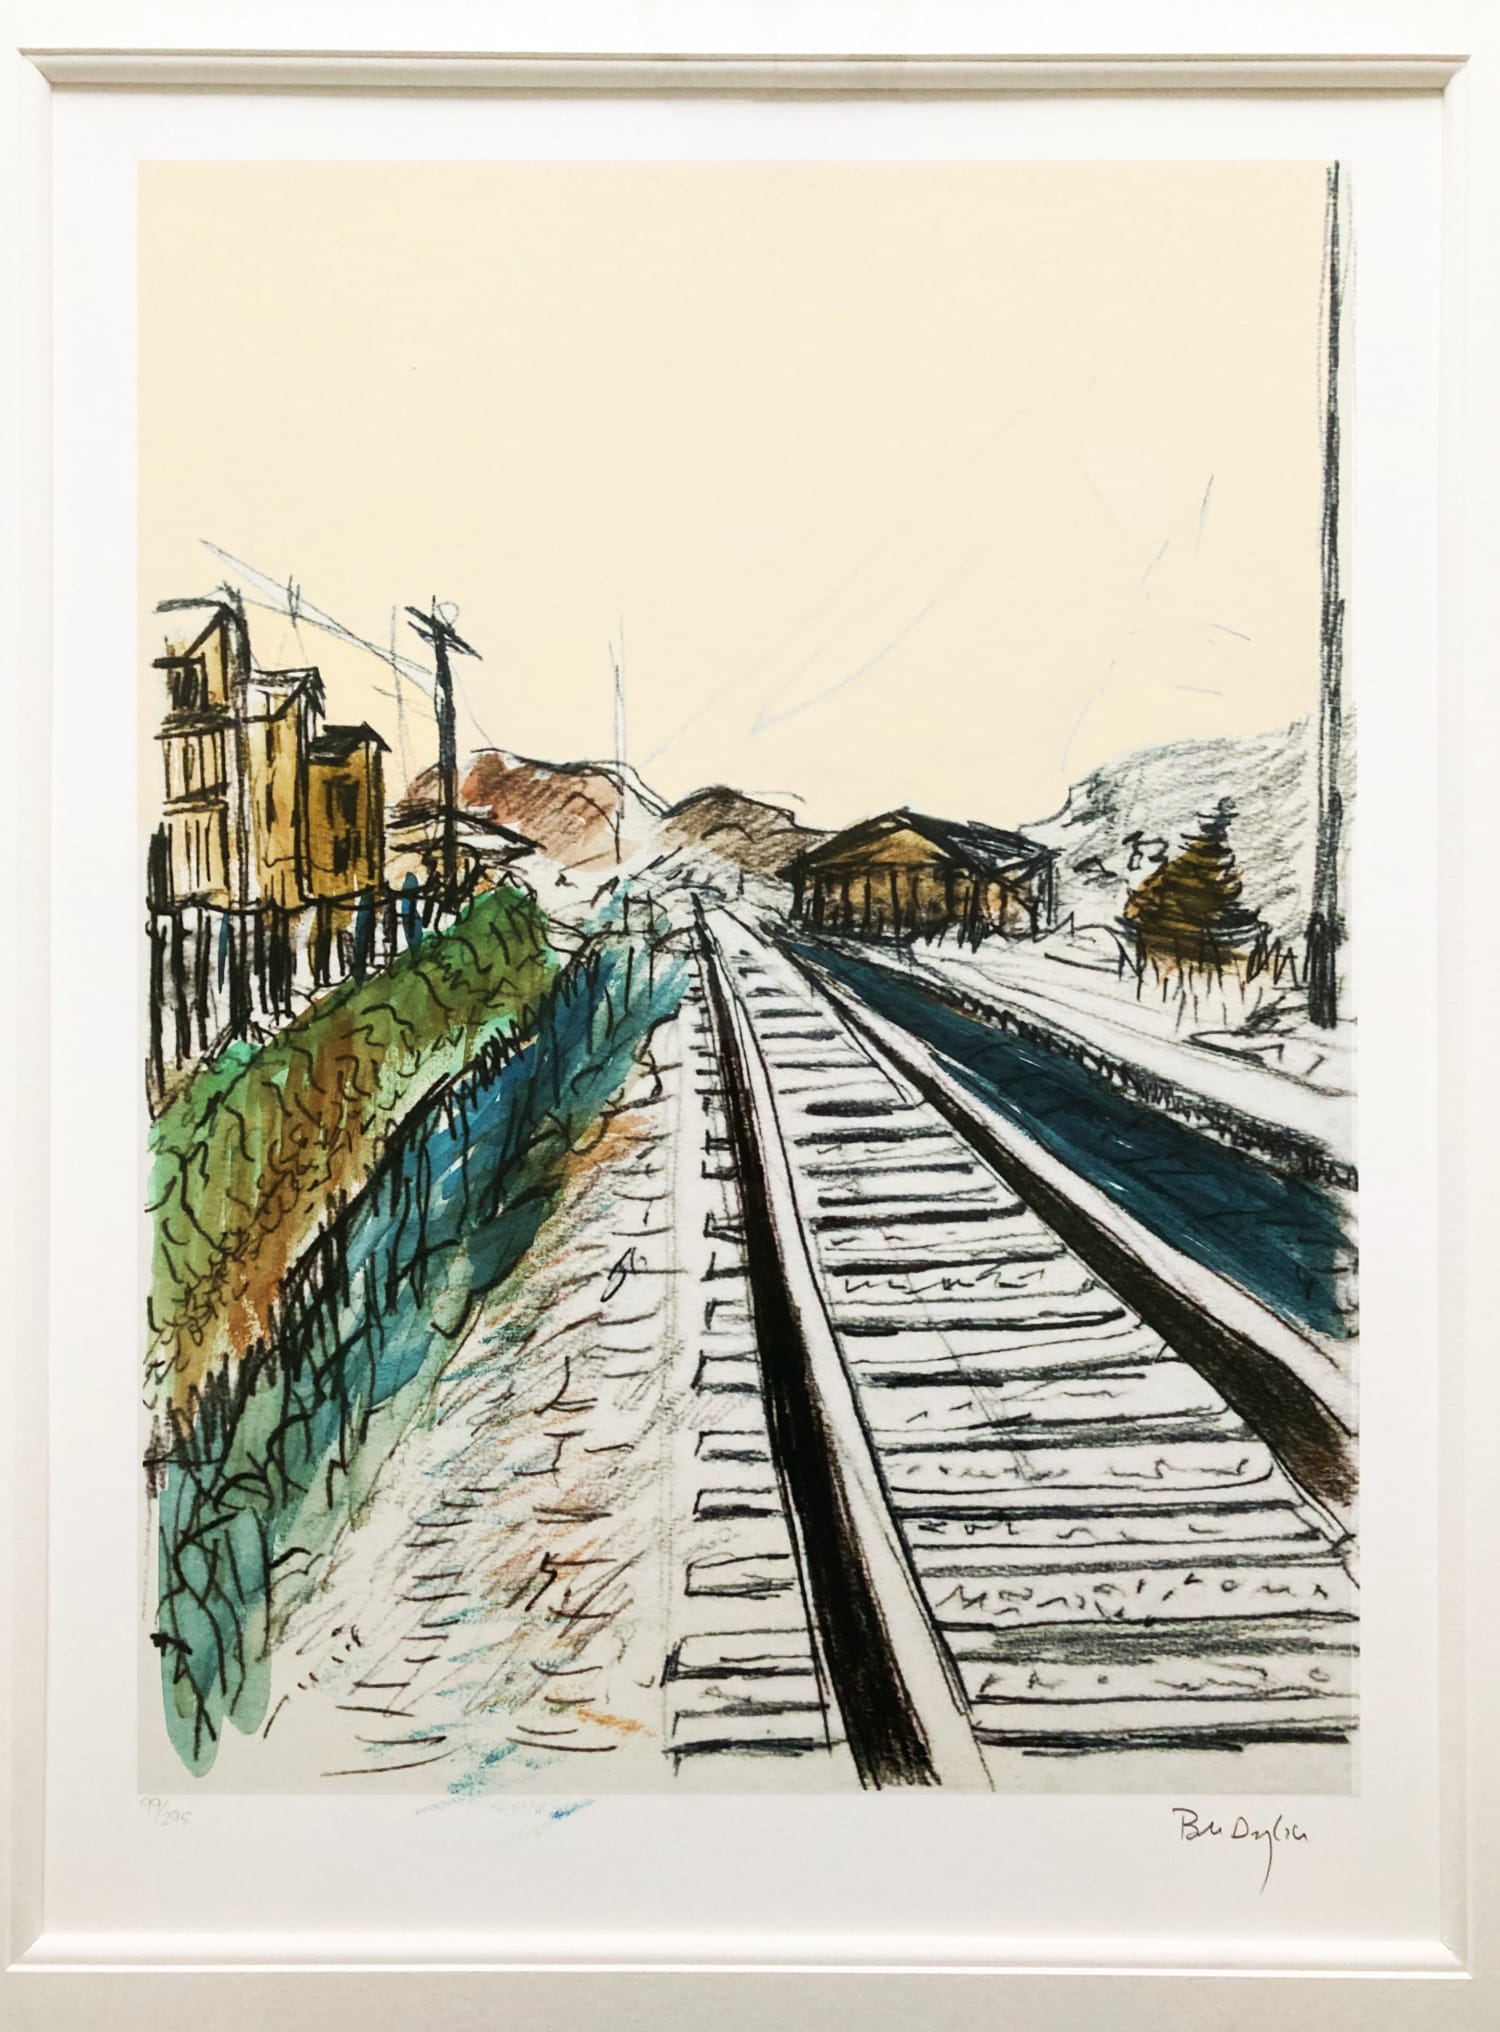 Bob Dylan - Train Tracks, 2008